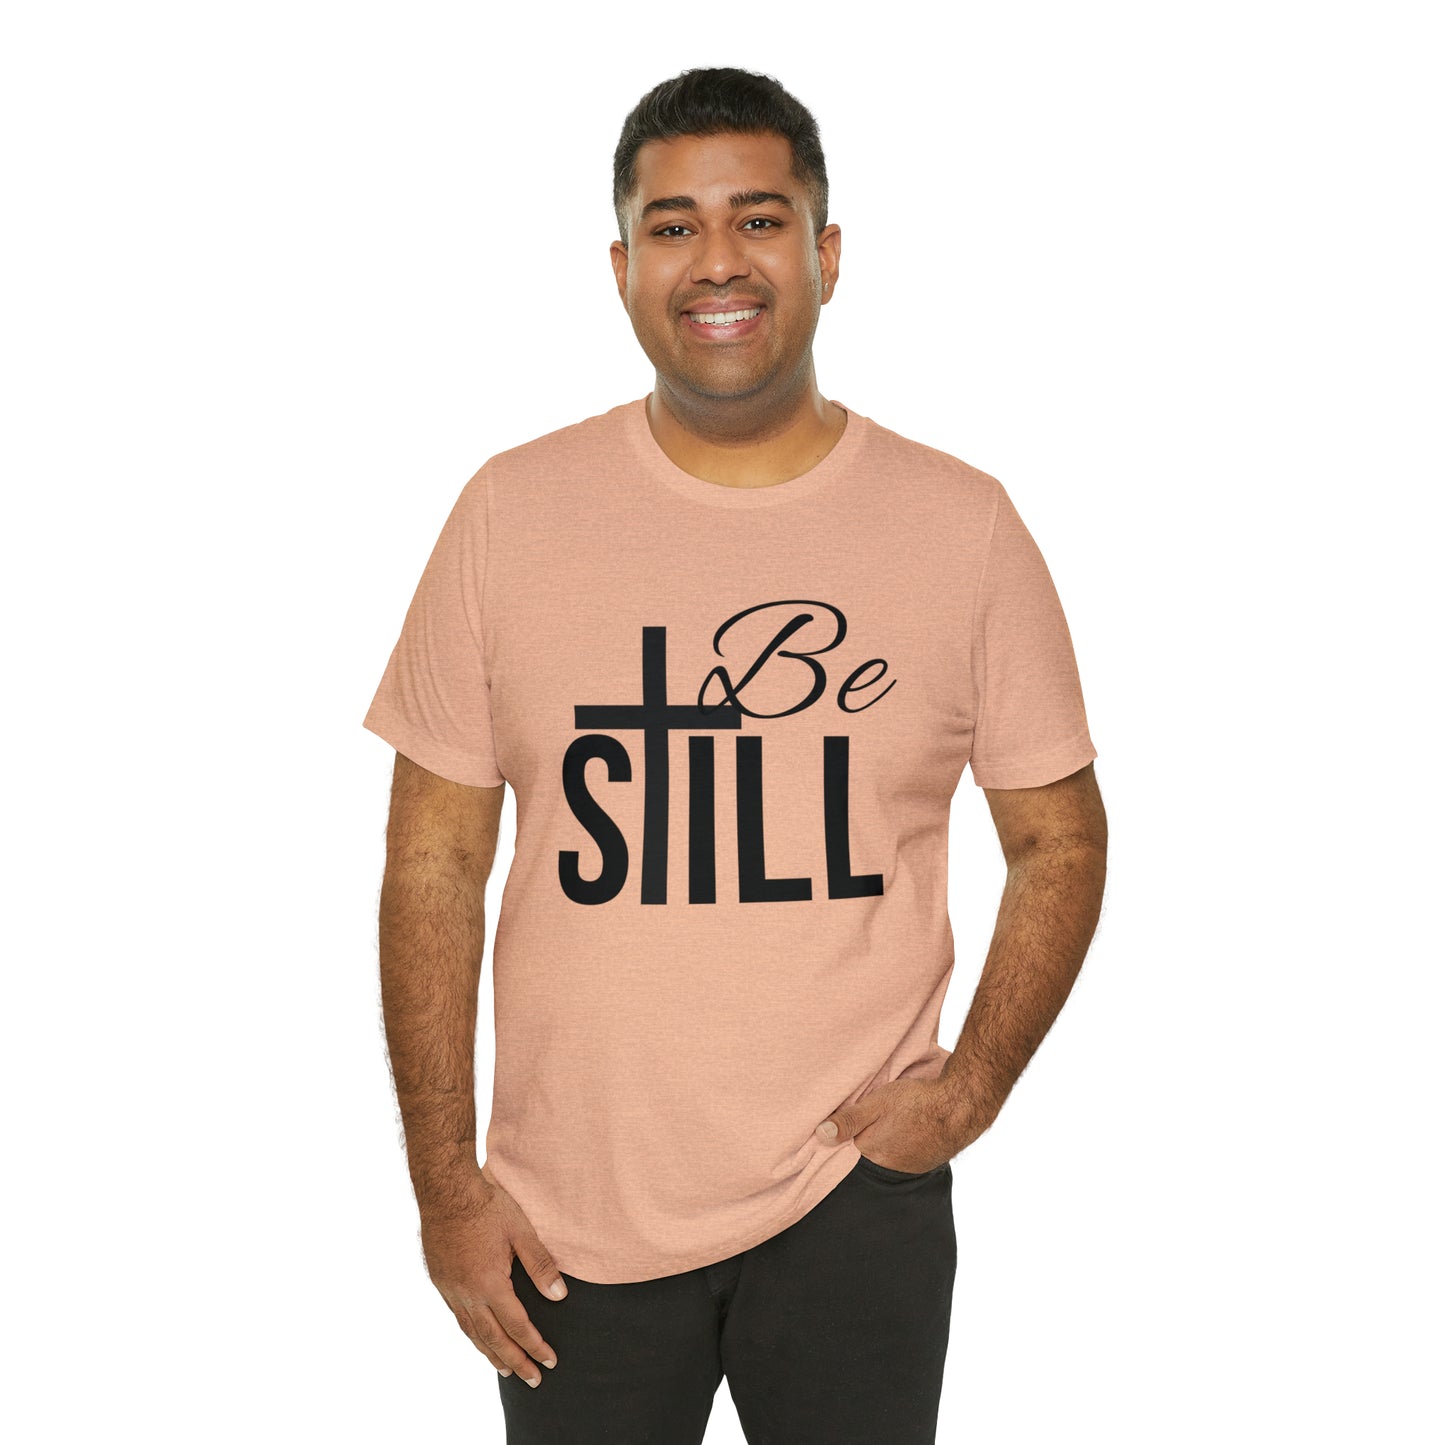 Be Still Christian Shirt, Minimalistic Bible Verse Tshirt design for Christian man, Inspirational Religious Faith TShirt gift for her